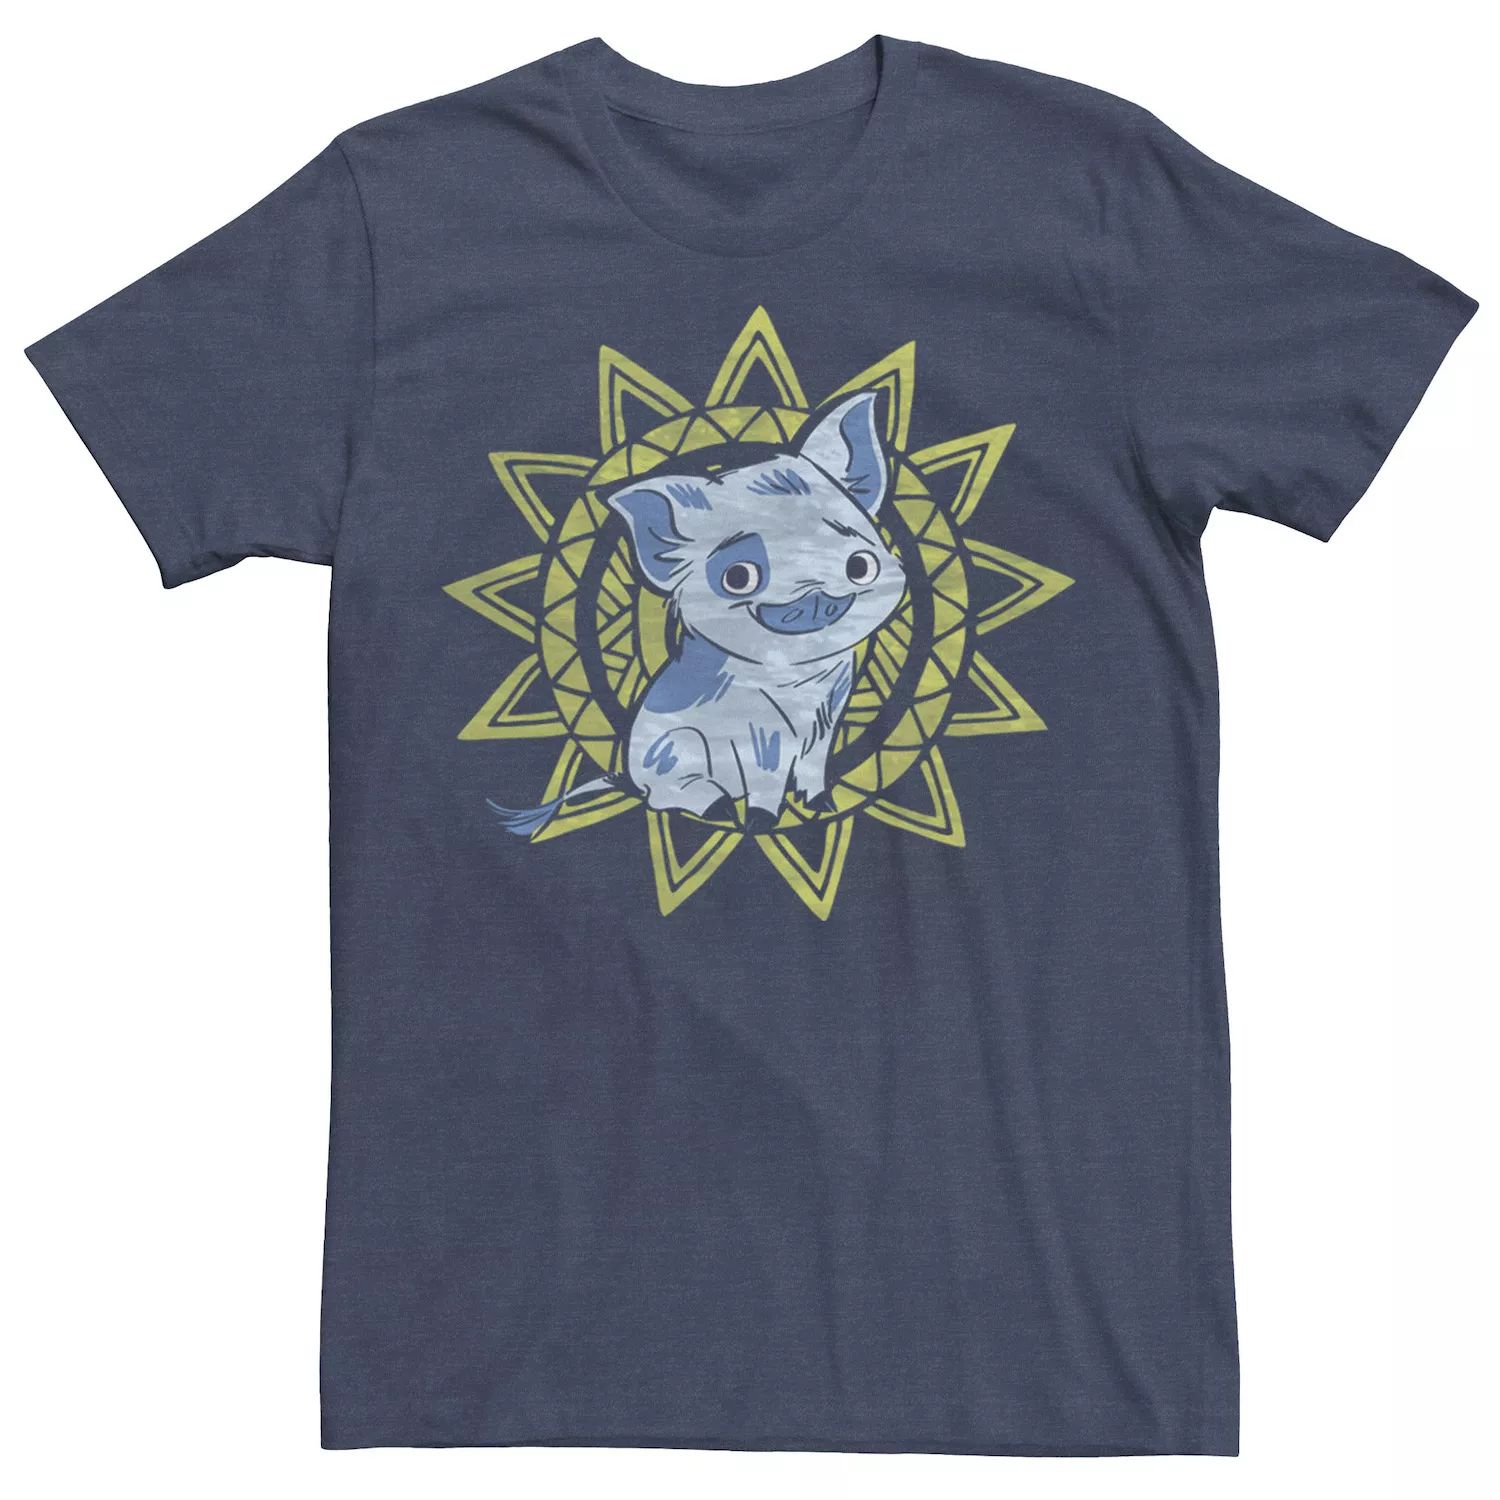 Мужская футболка Disney Moana Pua с геометрическим рисунком солнца и плакатом